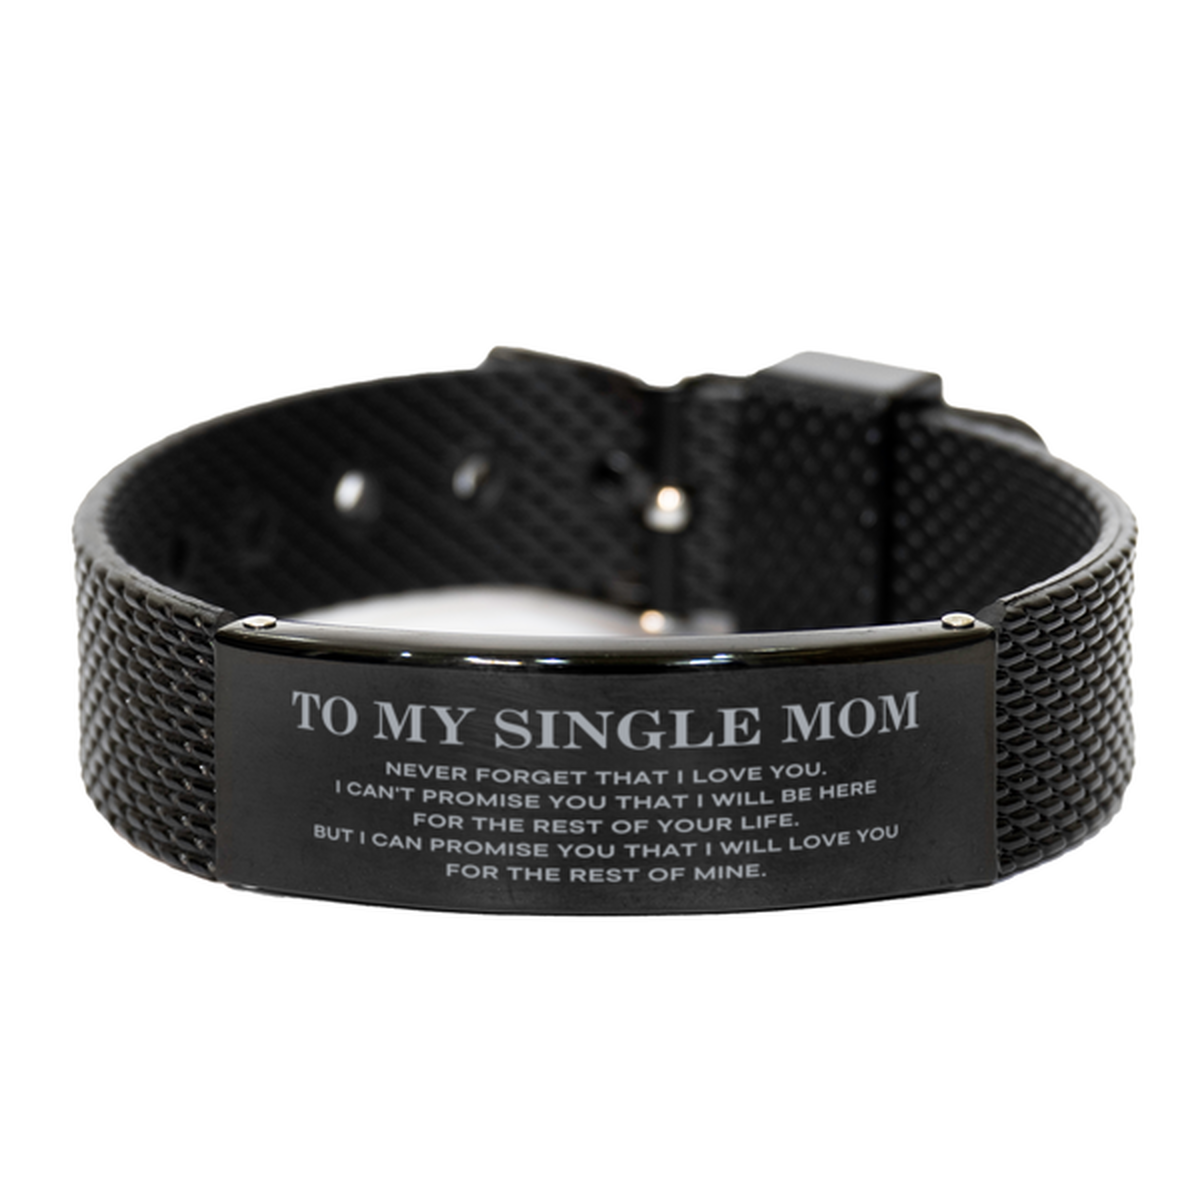 To My Single Mom Gifts, I will love you for the rest of mine, Love Single Mom Bracelet, Birthday Christmas Unique Black Shark Mesh Bracelet For Single Mom